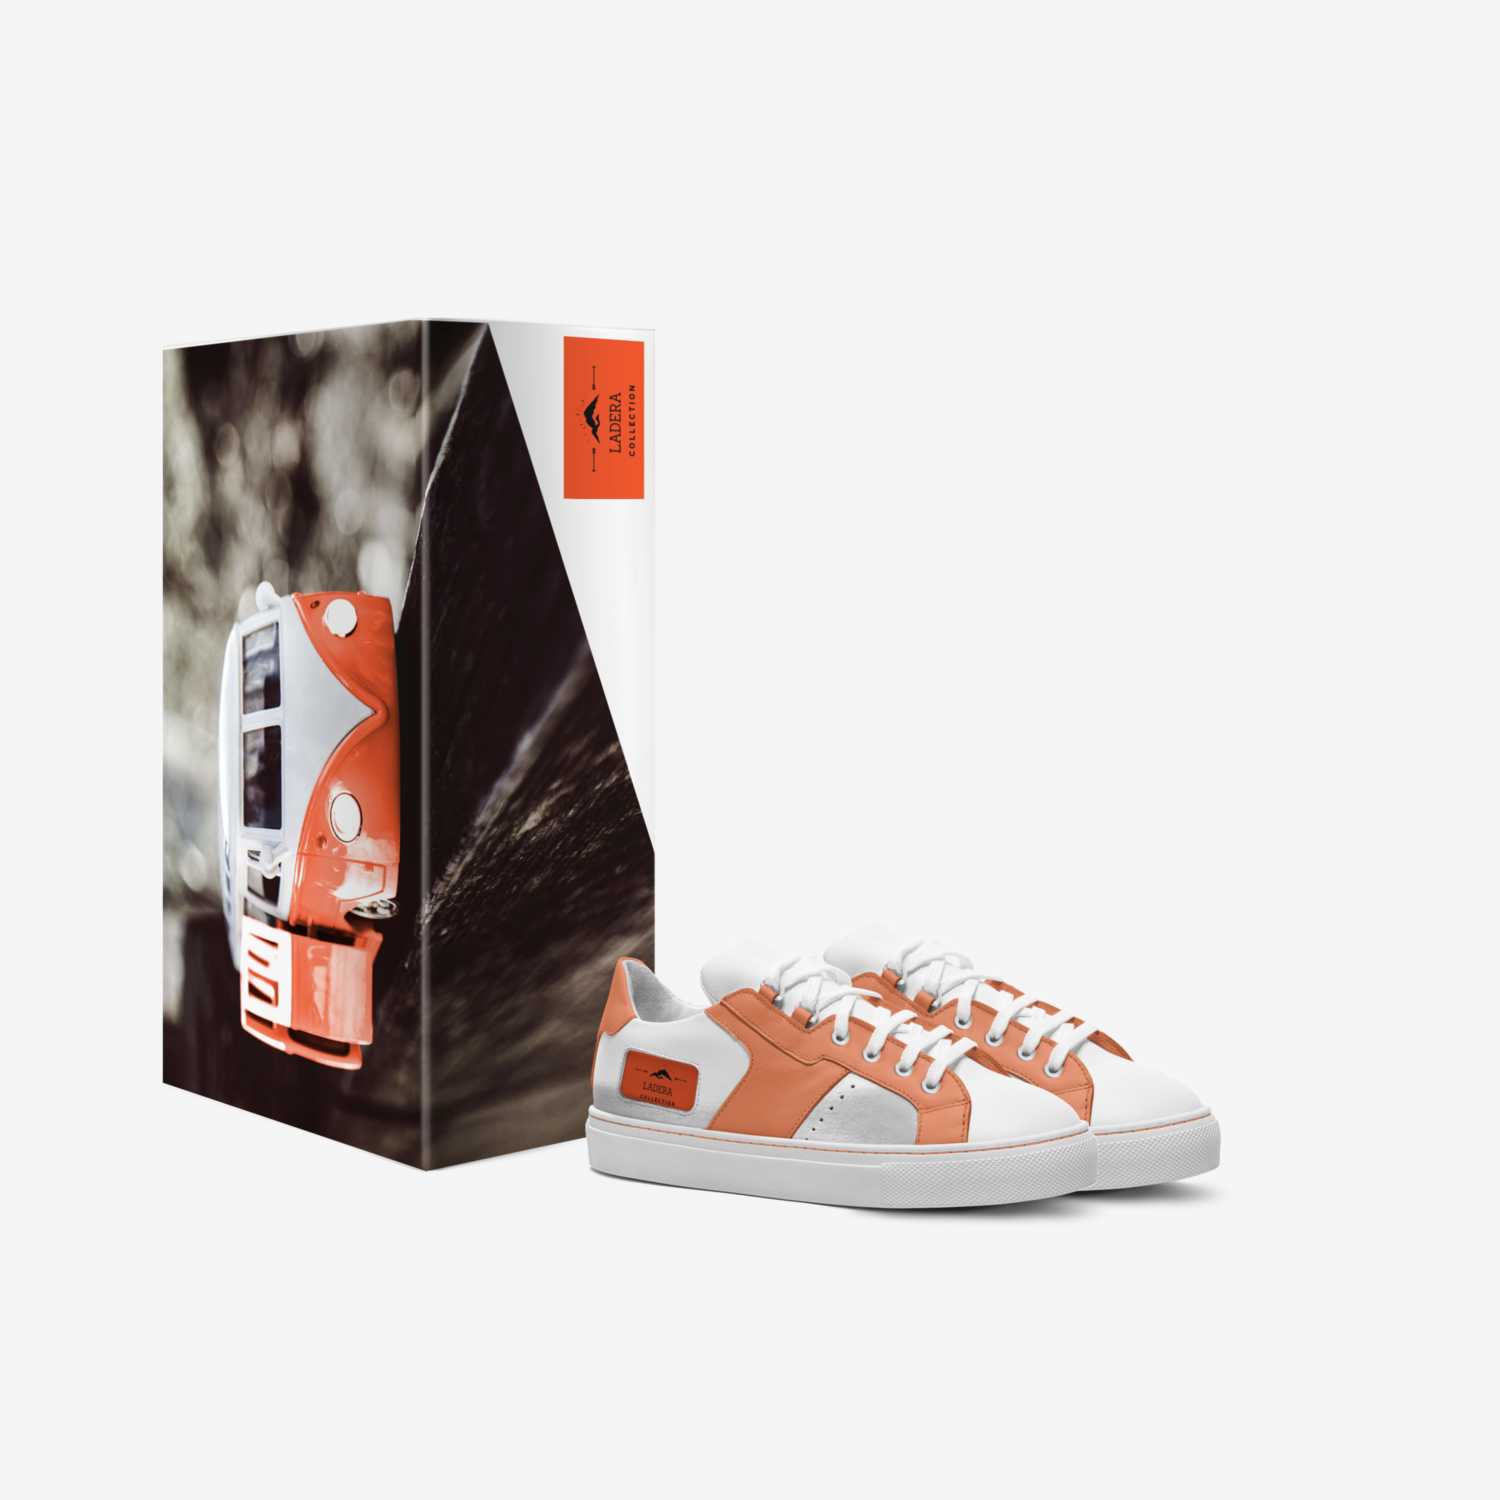 LADERA  custom made in Italy shoes by Silvino Varela | Box view